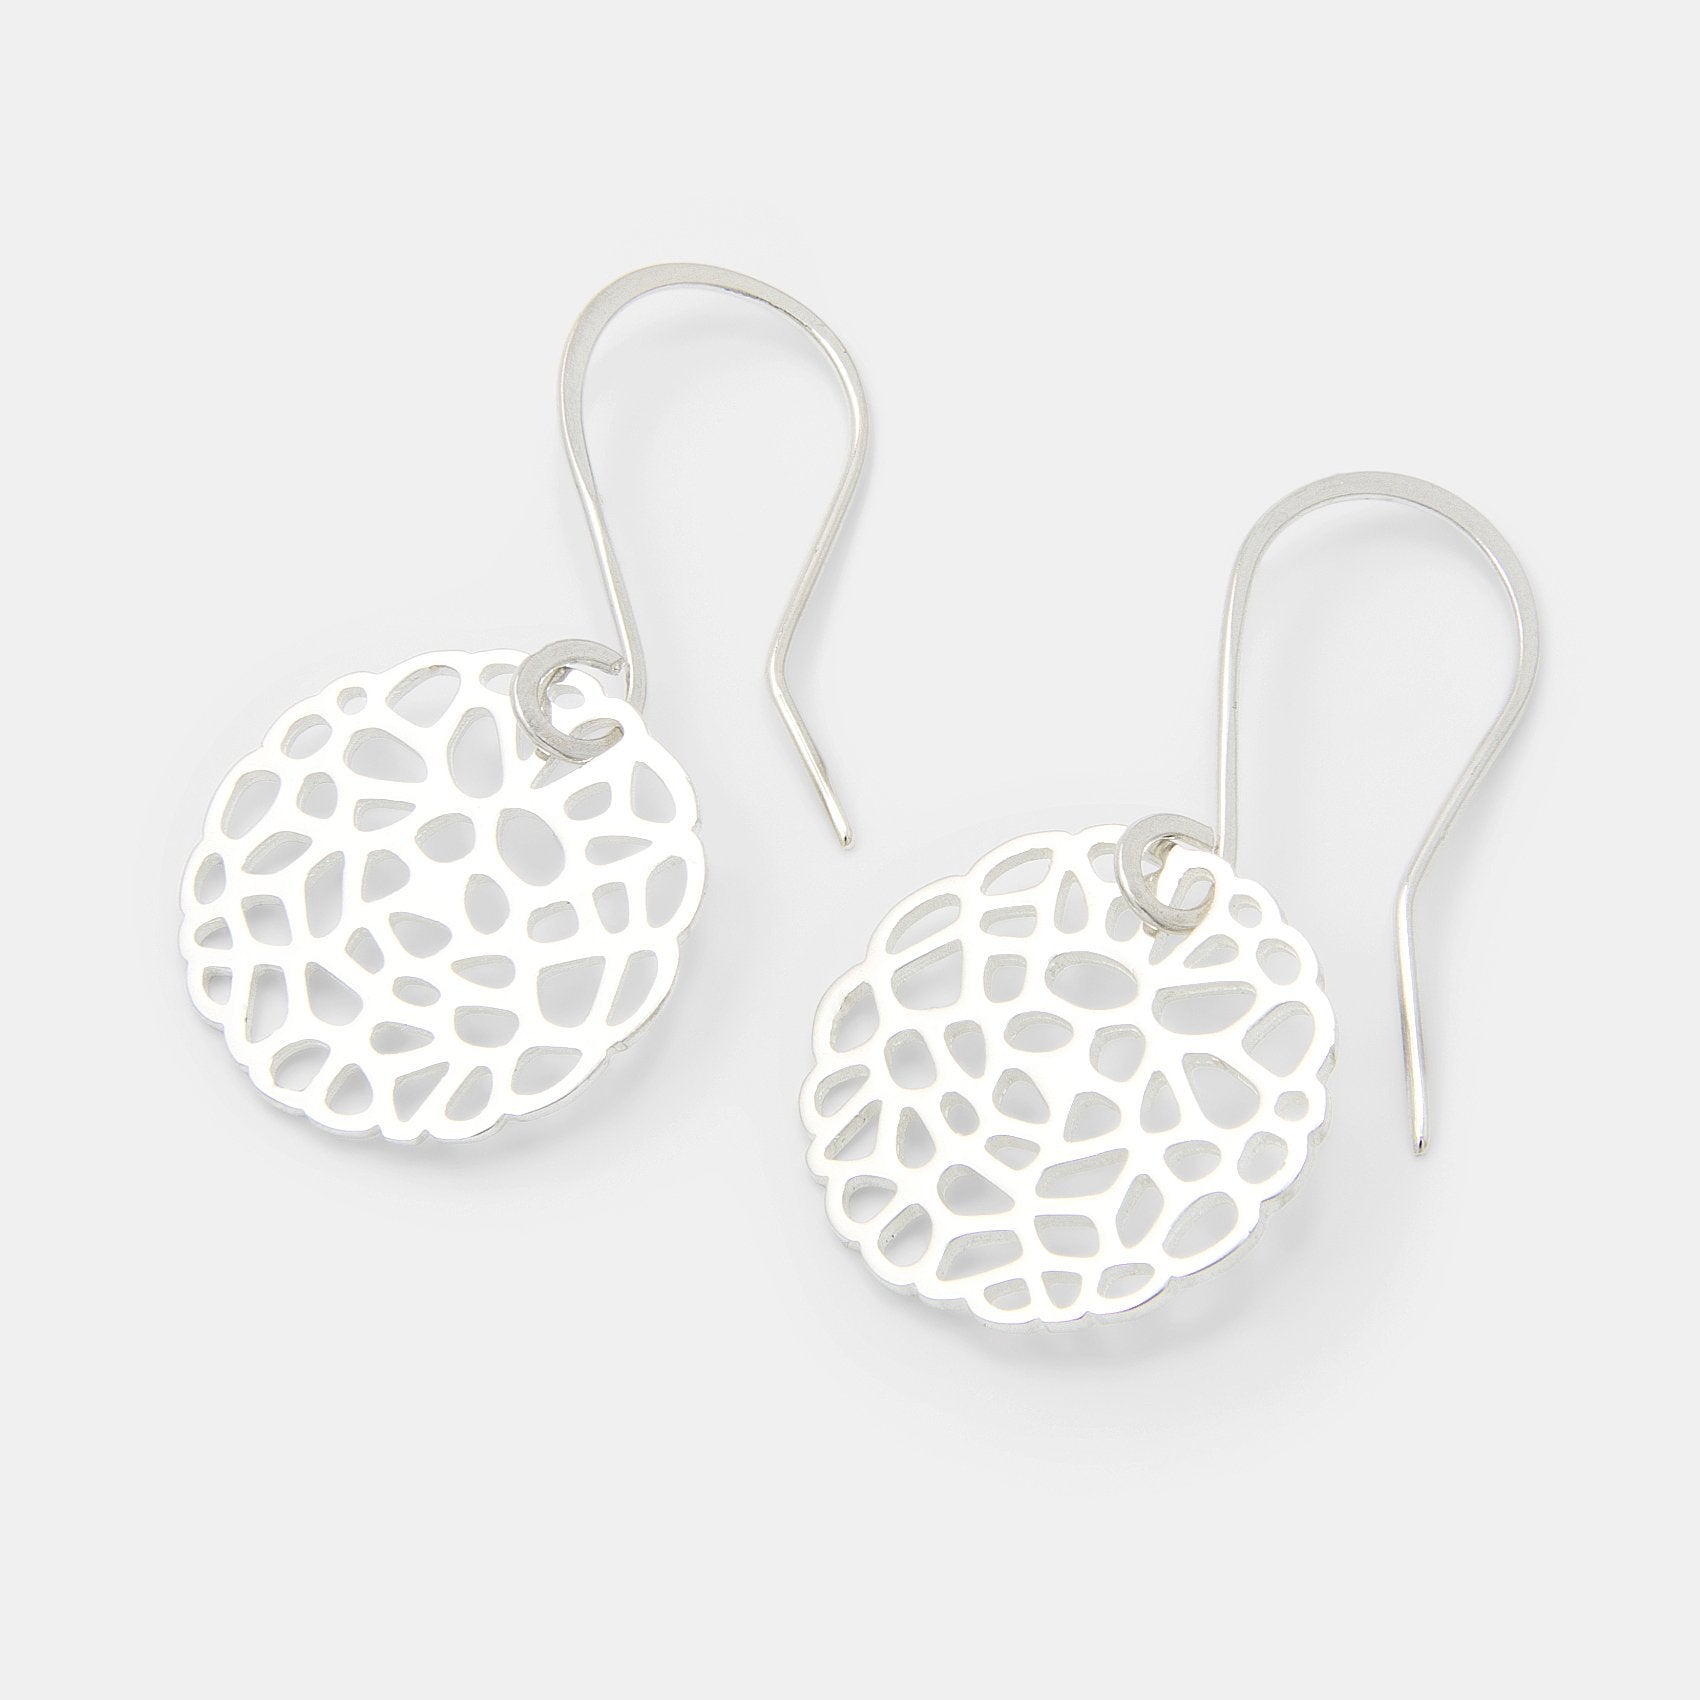 Coral silver drop earrings - Simone Walsh Jewellery Australia